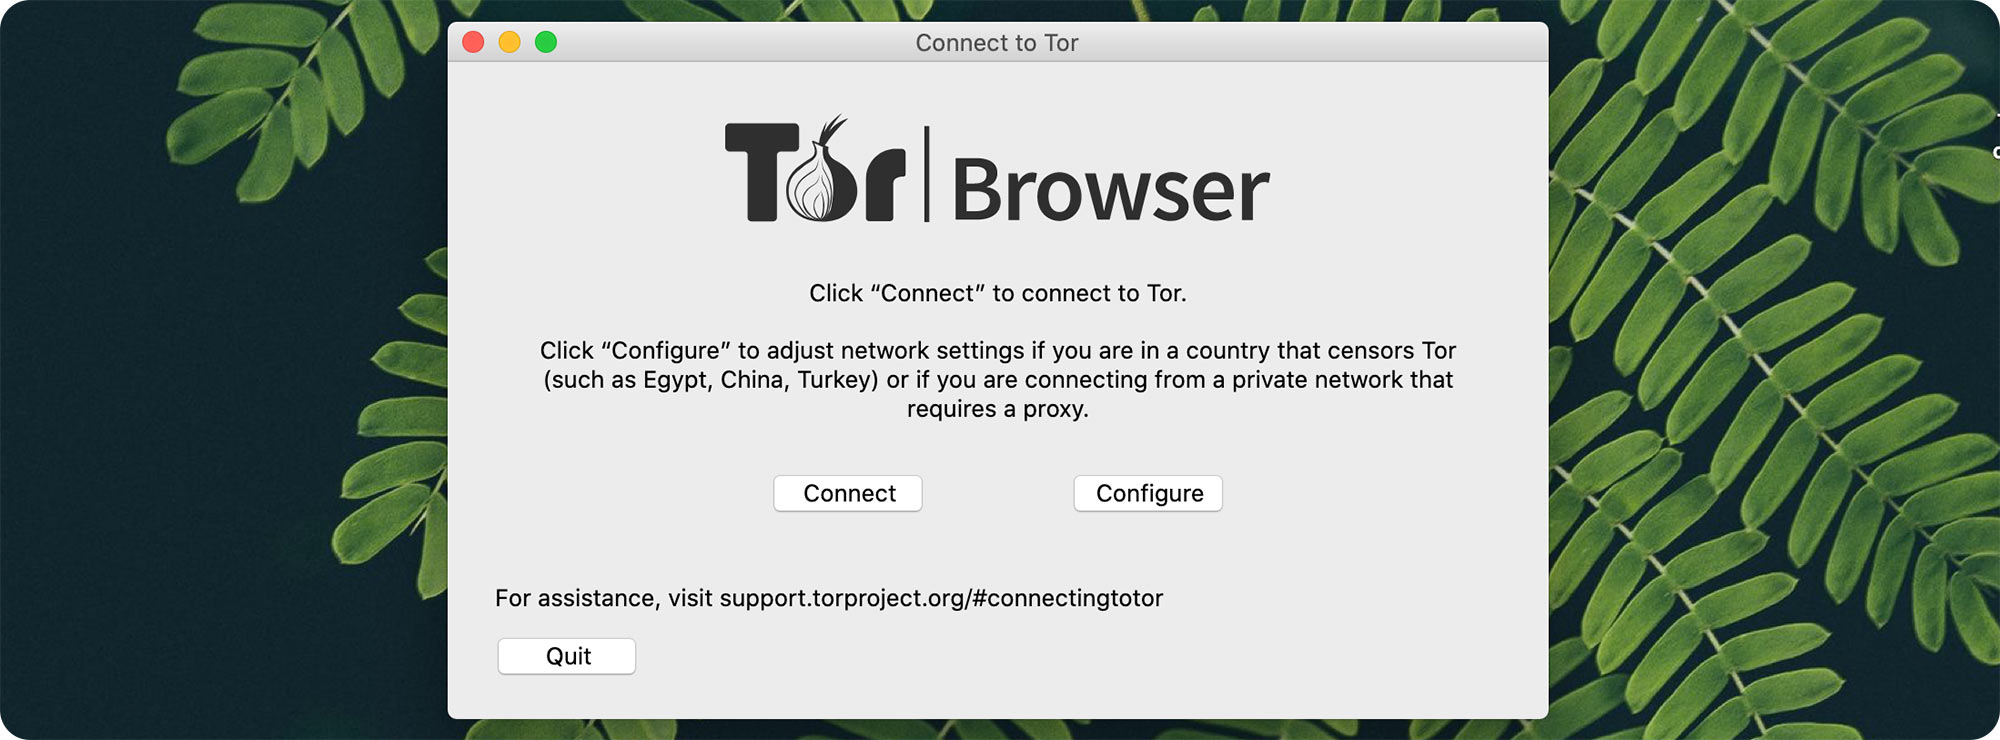 tor browser for macbook вход на гидру